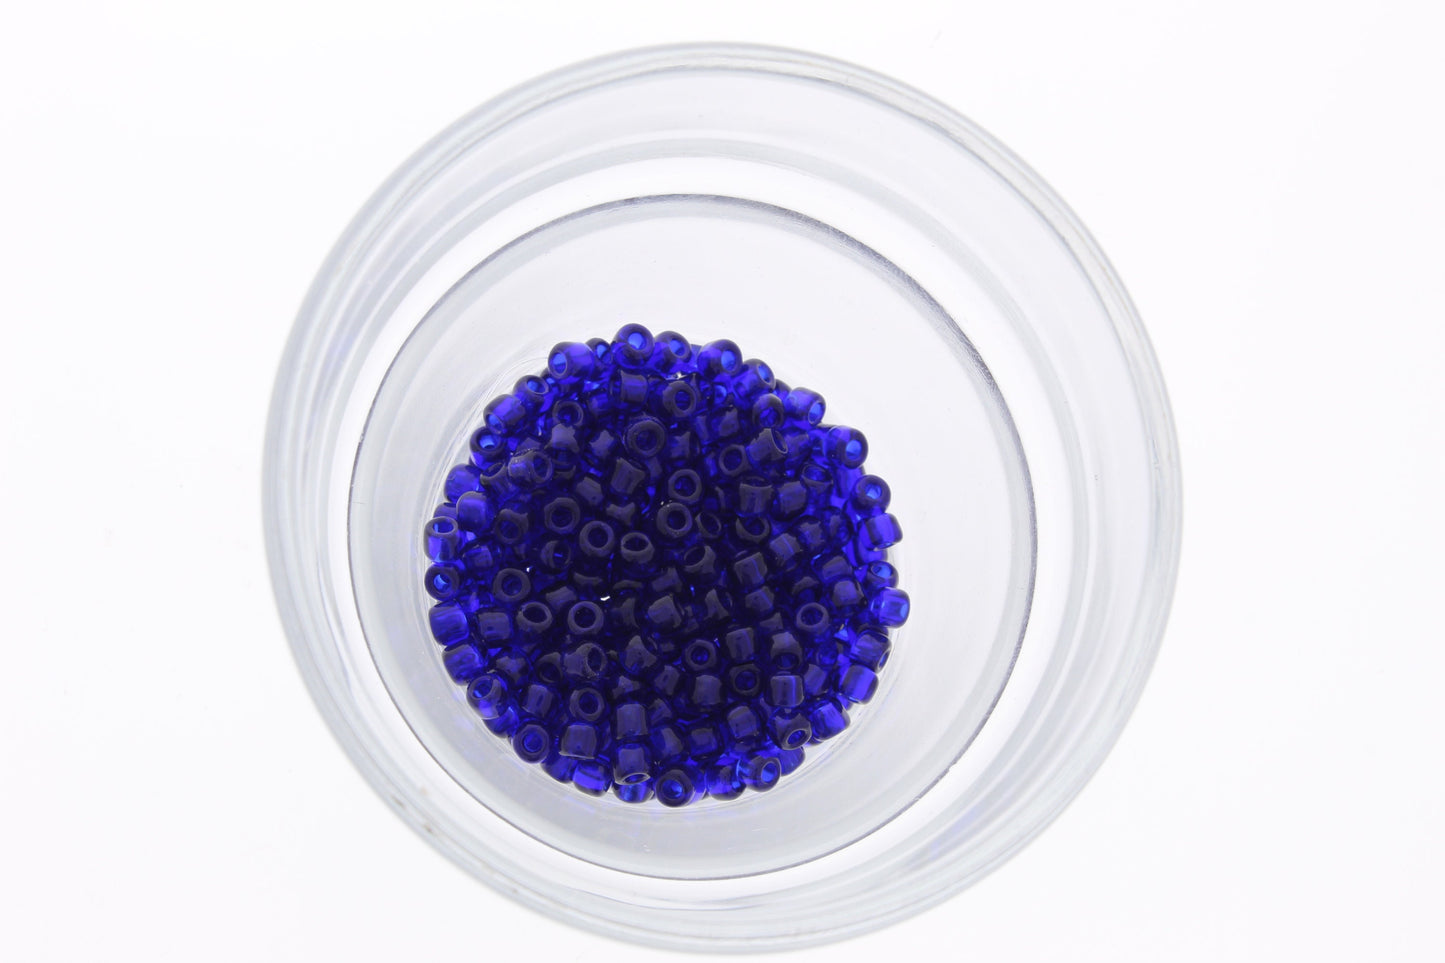 Matsuno 3.6mm Japanese Seed Beads 6/0, transparent cobalt Blue, 16 grams